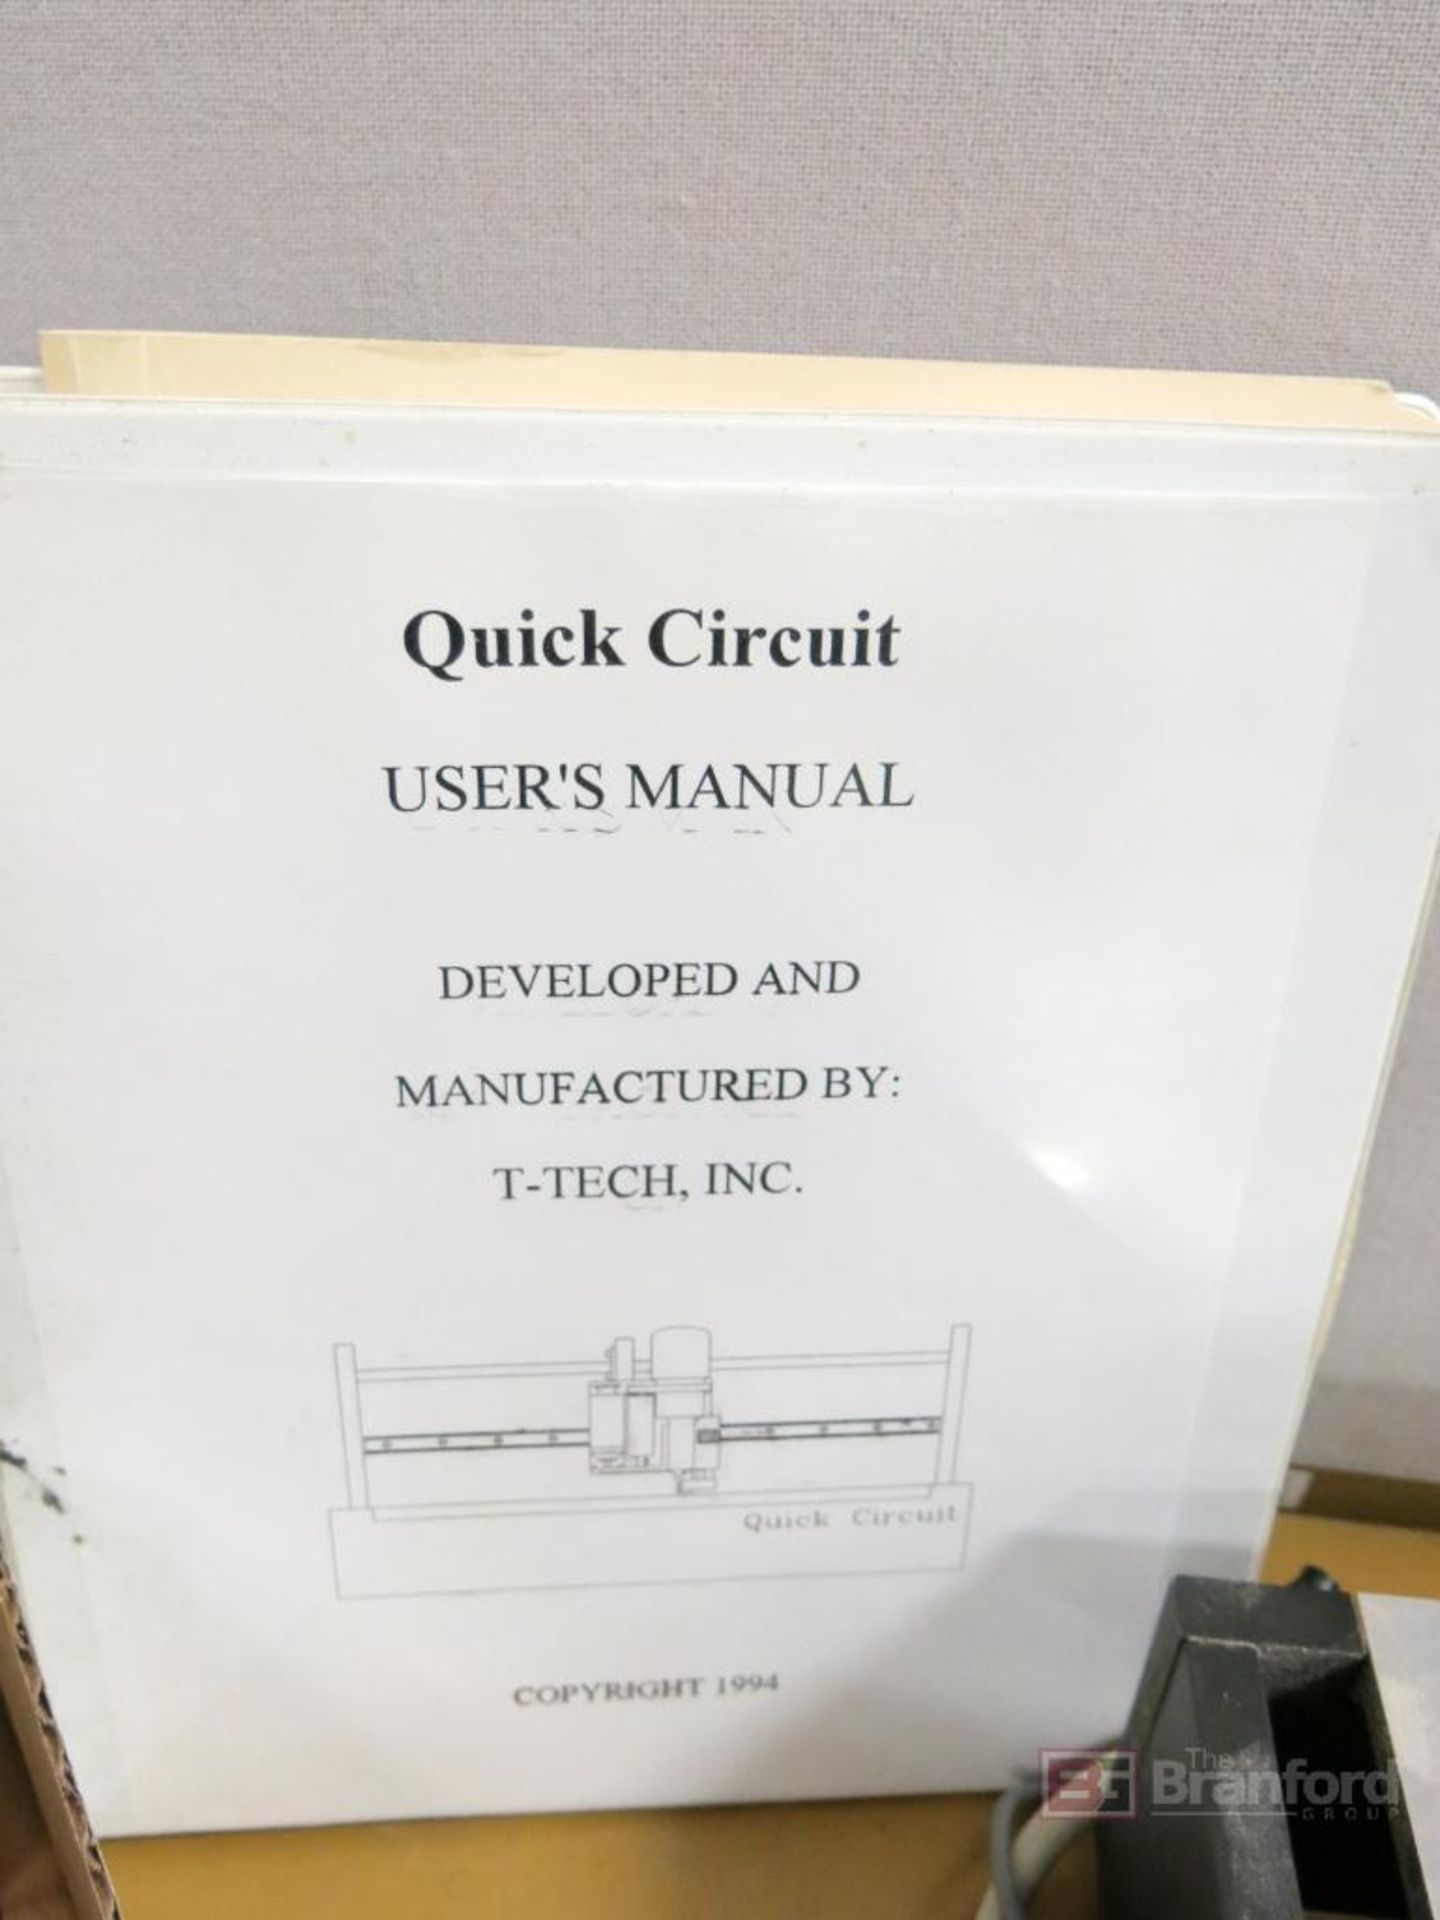 Quick Circuit Model 7000 Prototype Circuitboard Maker - Image 5 of 9